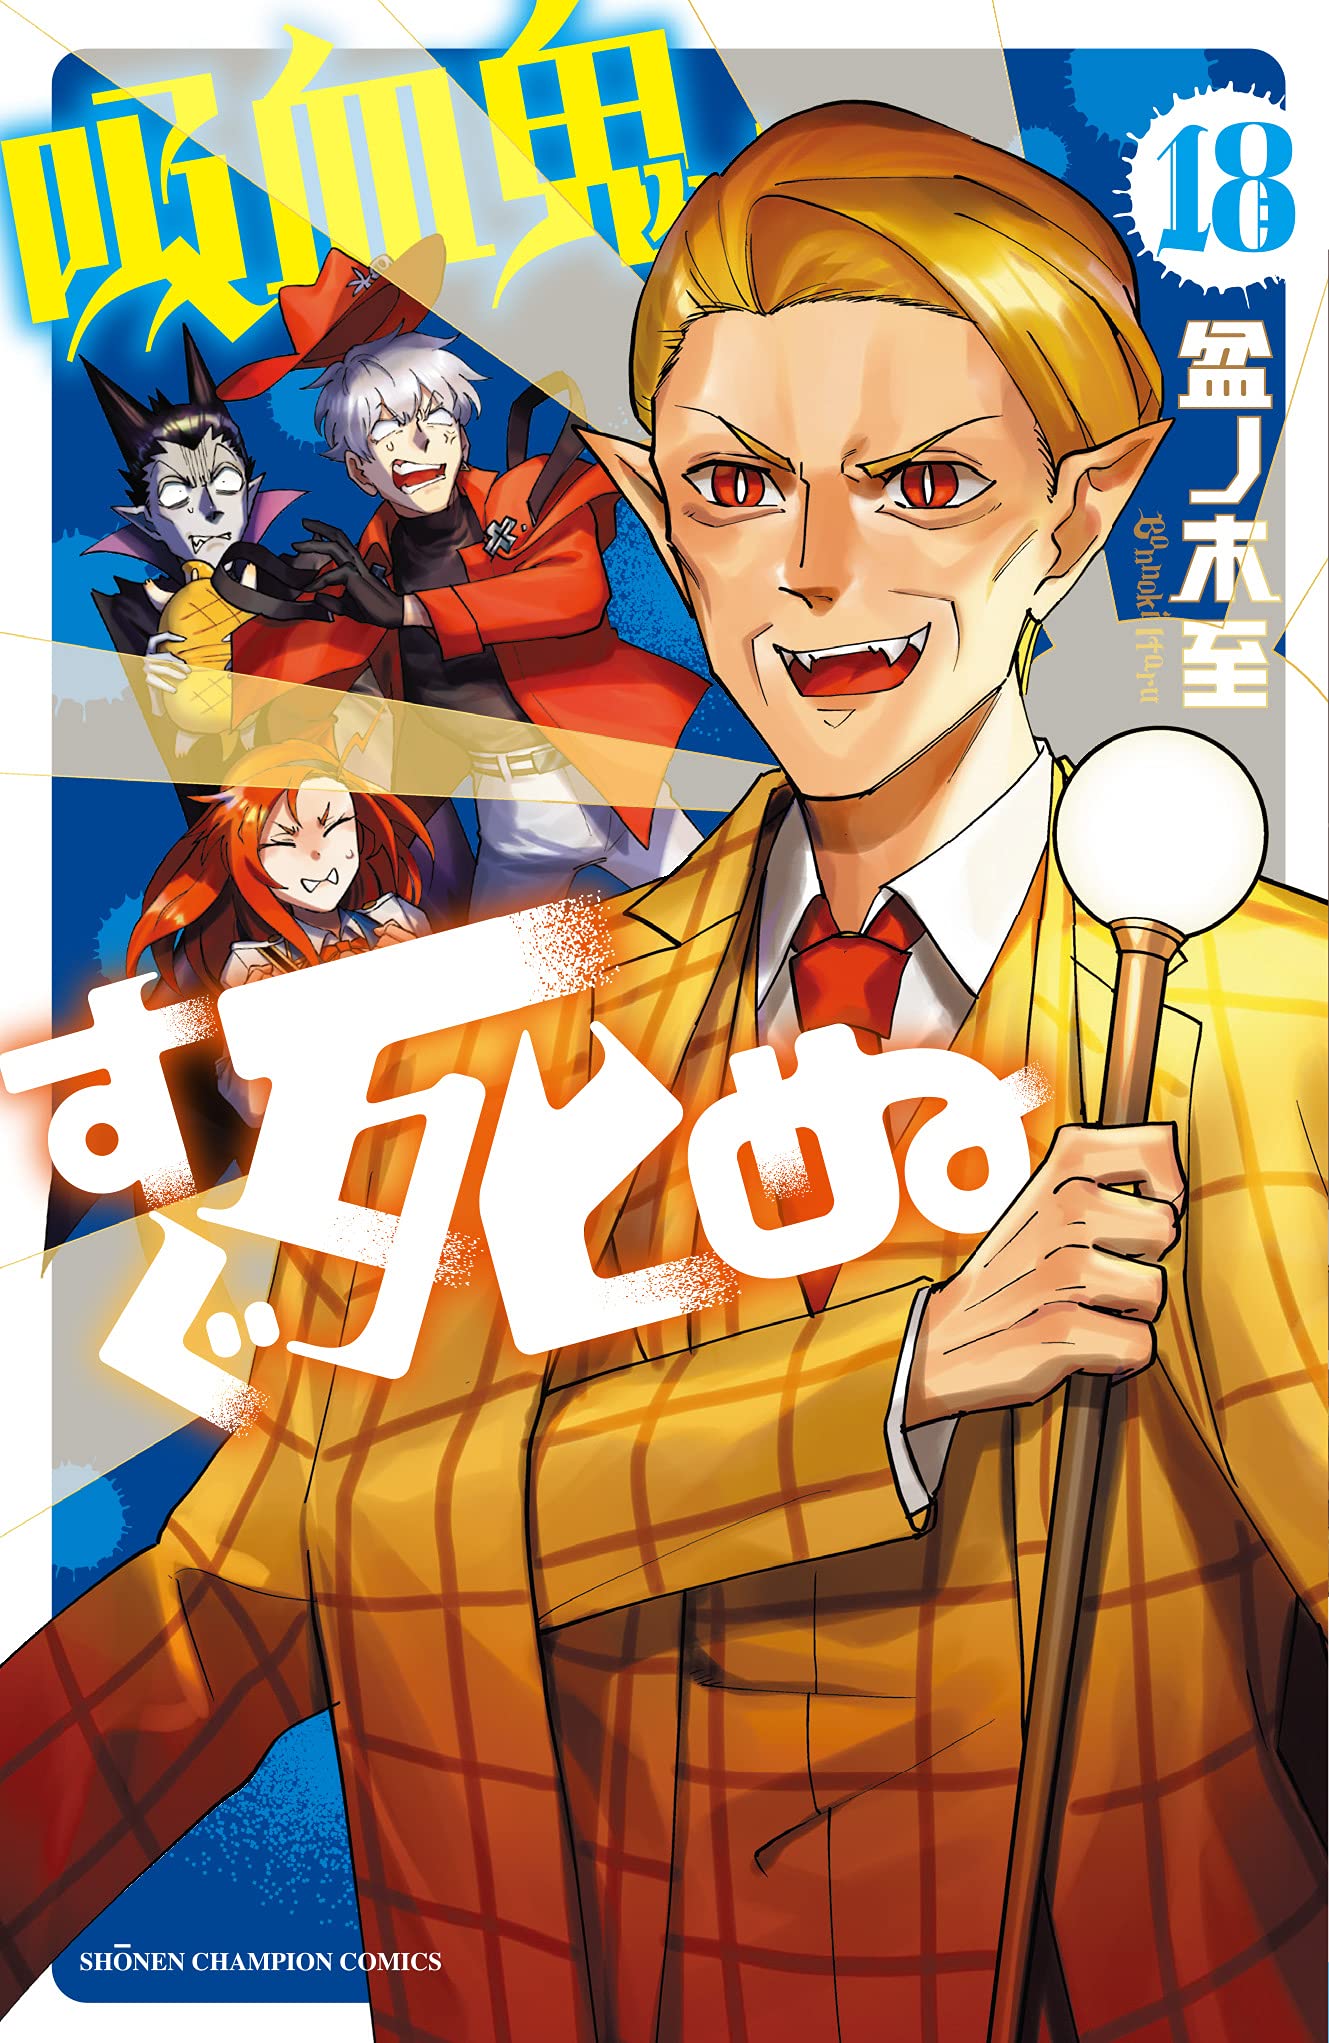 Manga Mogura RE on X: Kyuuketsuki sugu shinu (The Vampire dies in no  time) by Itaru Bonnoki has 3.3 million copies in circulation for vols 1-25  The series will resume in the